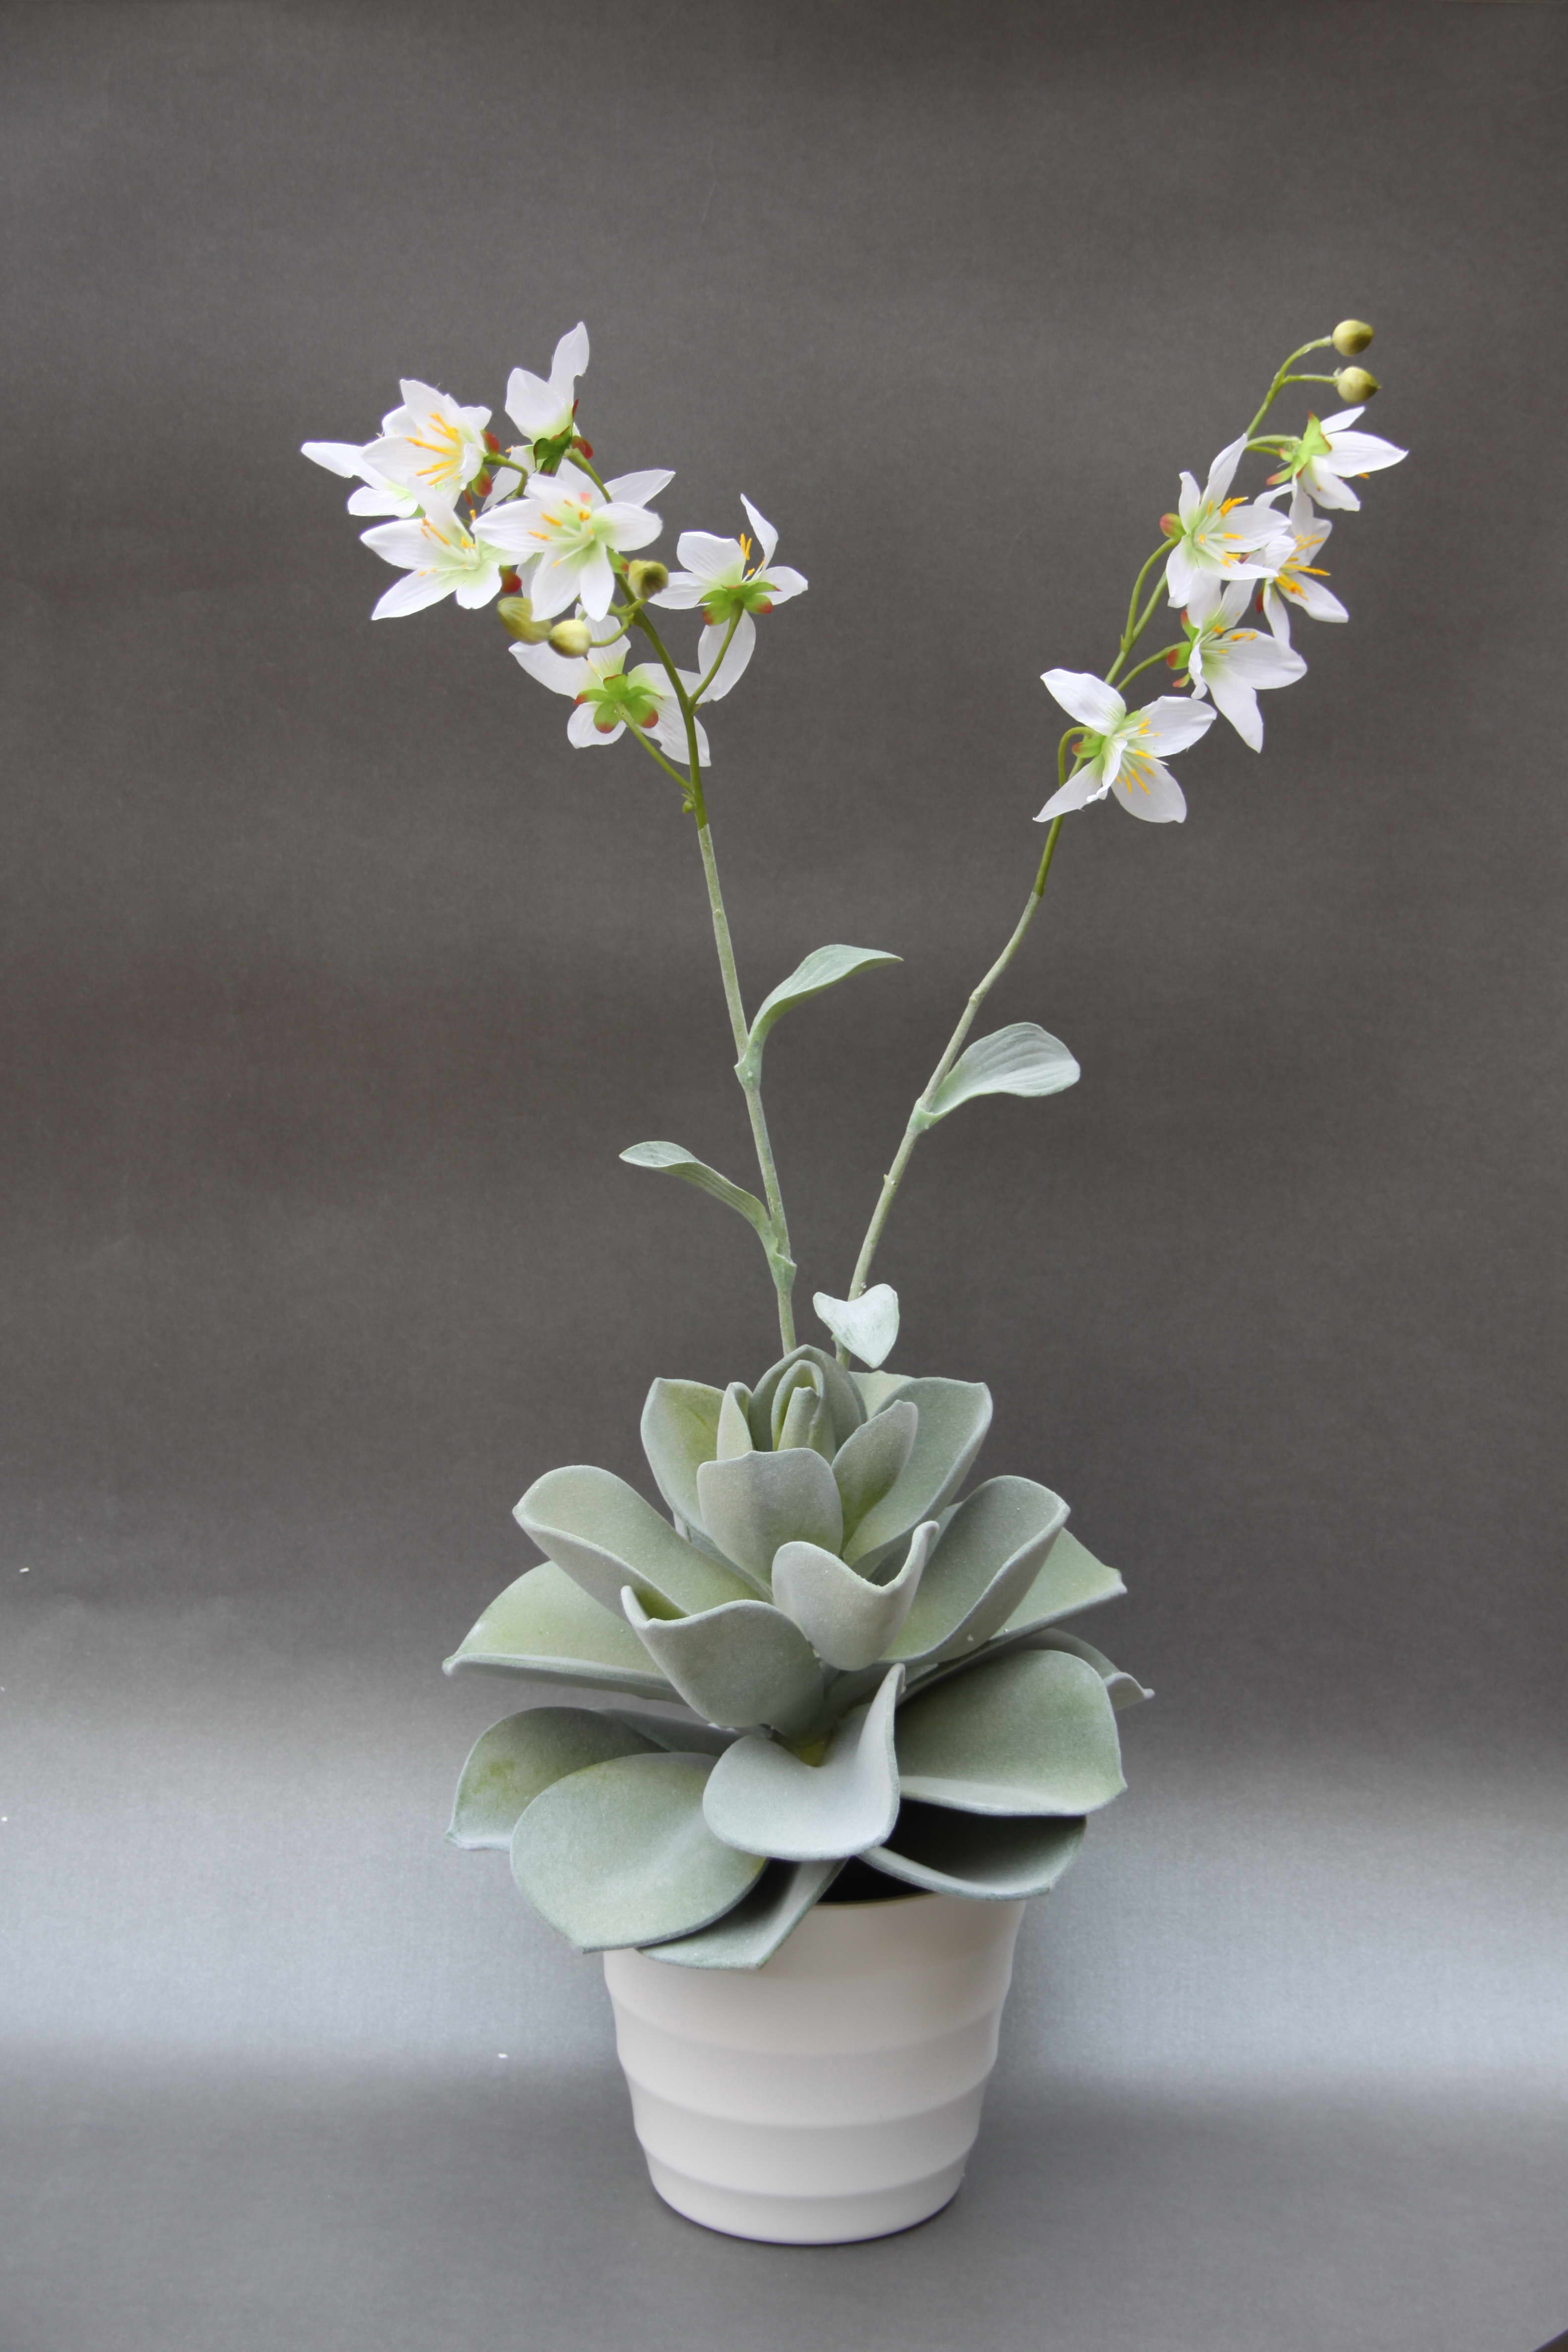 Chinese plastic Graptopetalum paraguayense simulation flower plant simulation Home Furnishing decoration1